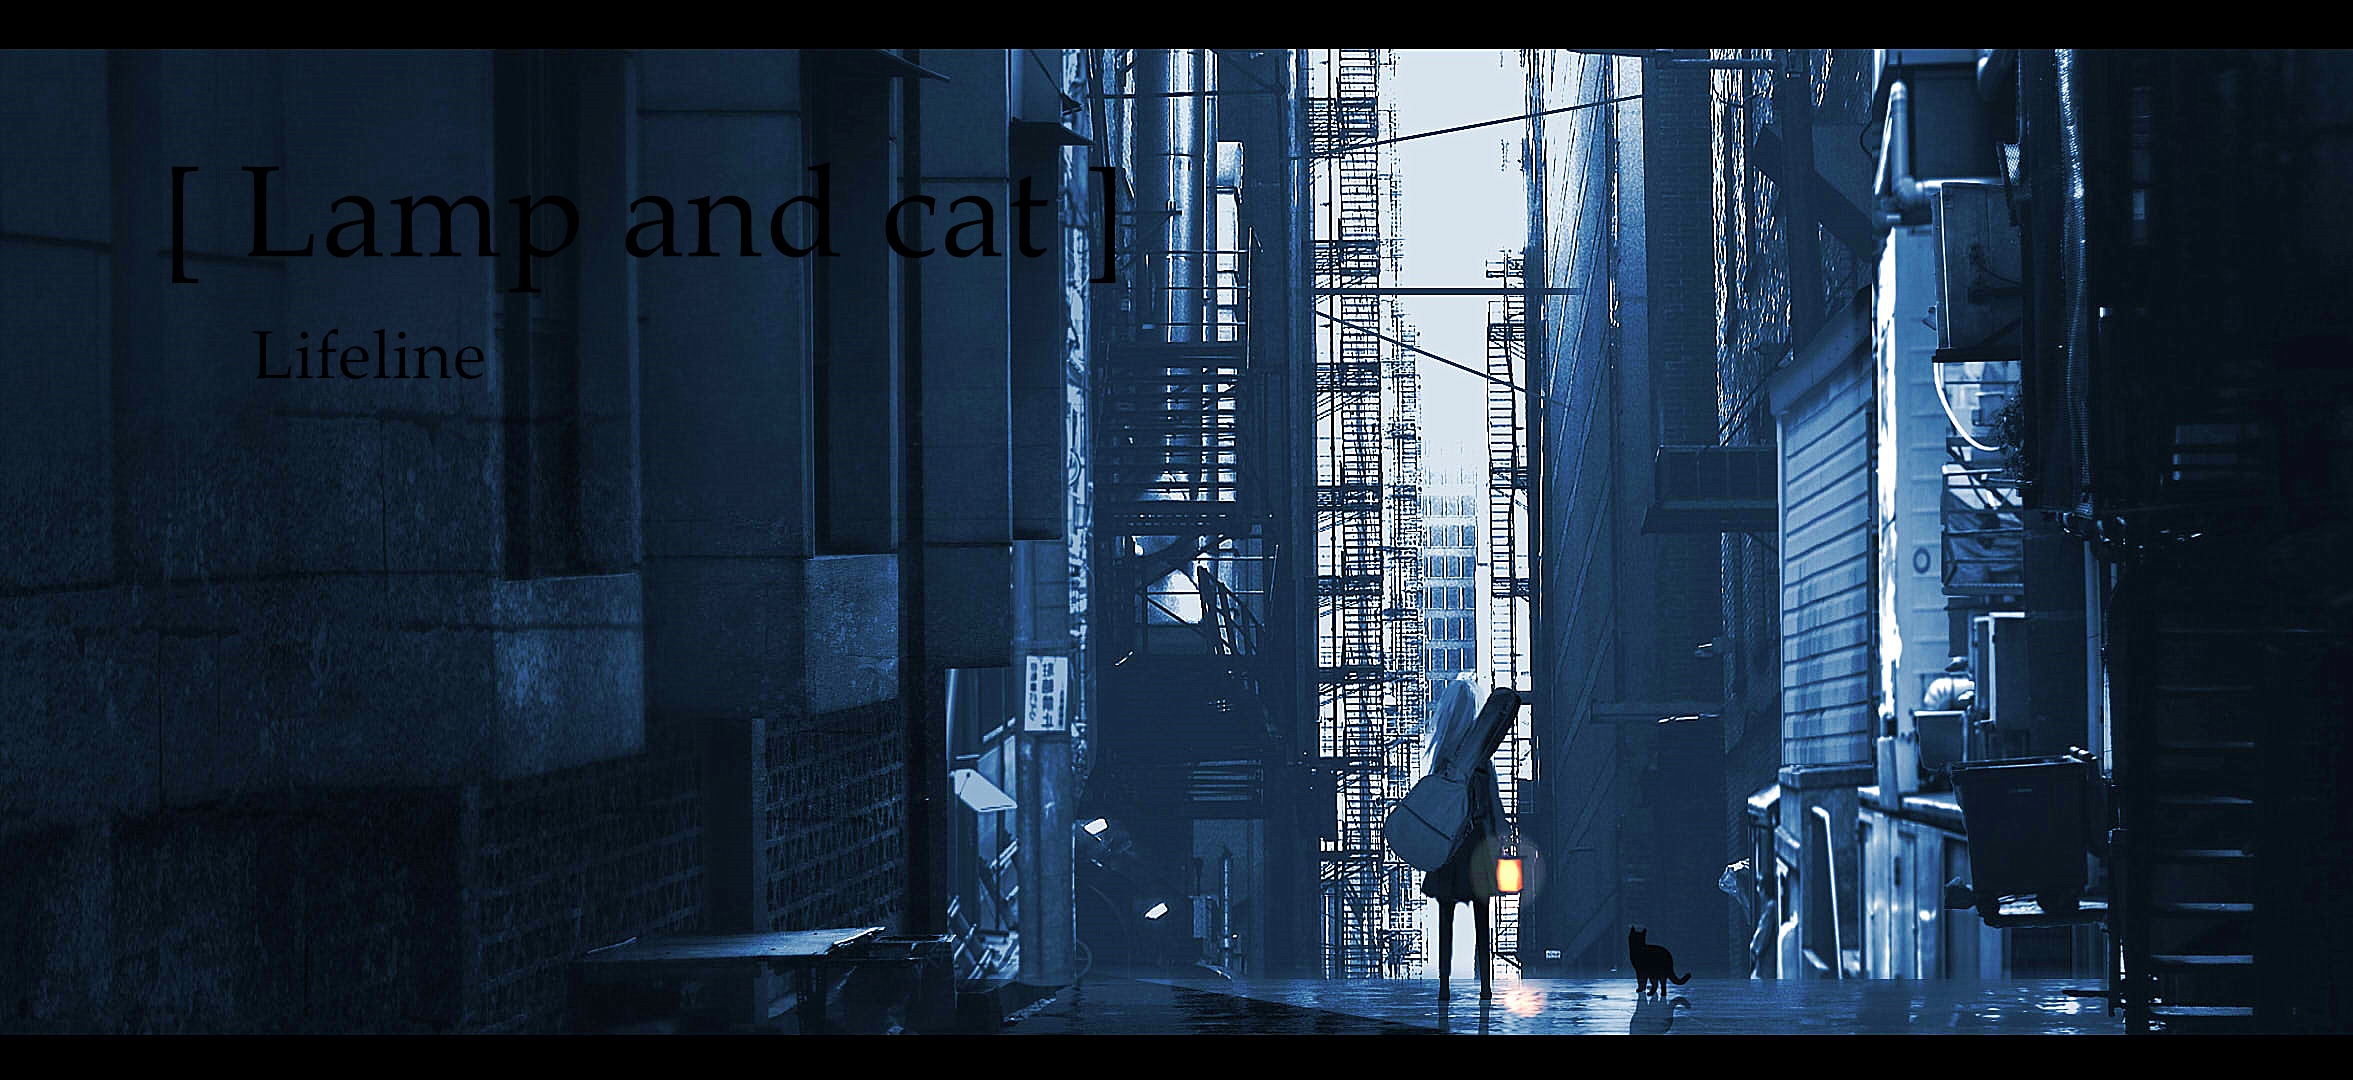 Anime 2353x1080 anime anime girls digital art artwork 2D portrait Lifeline lamp cats alleyway